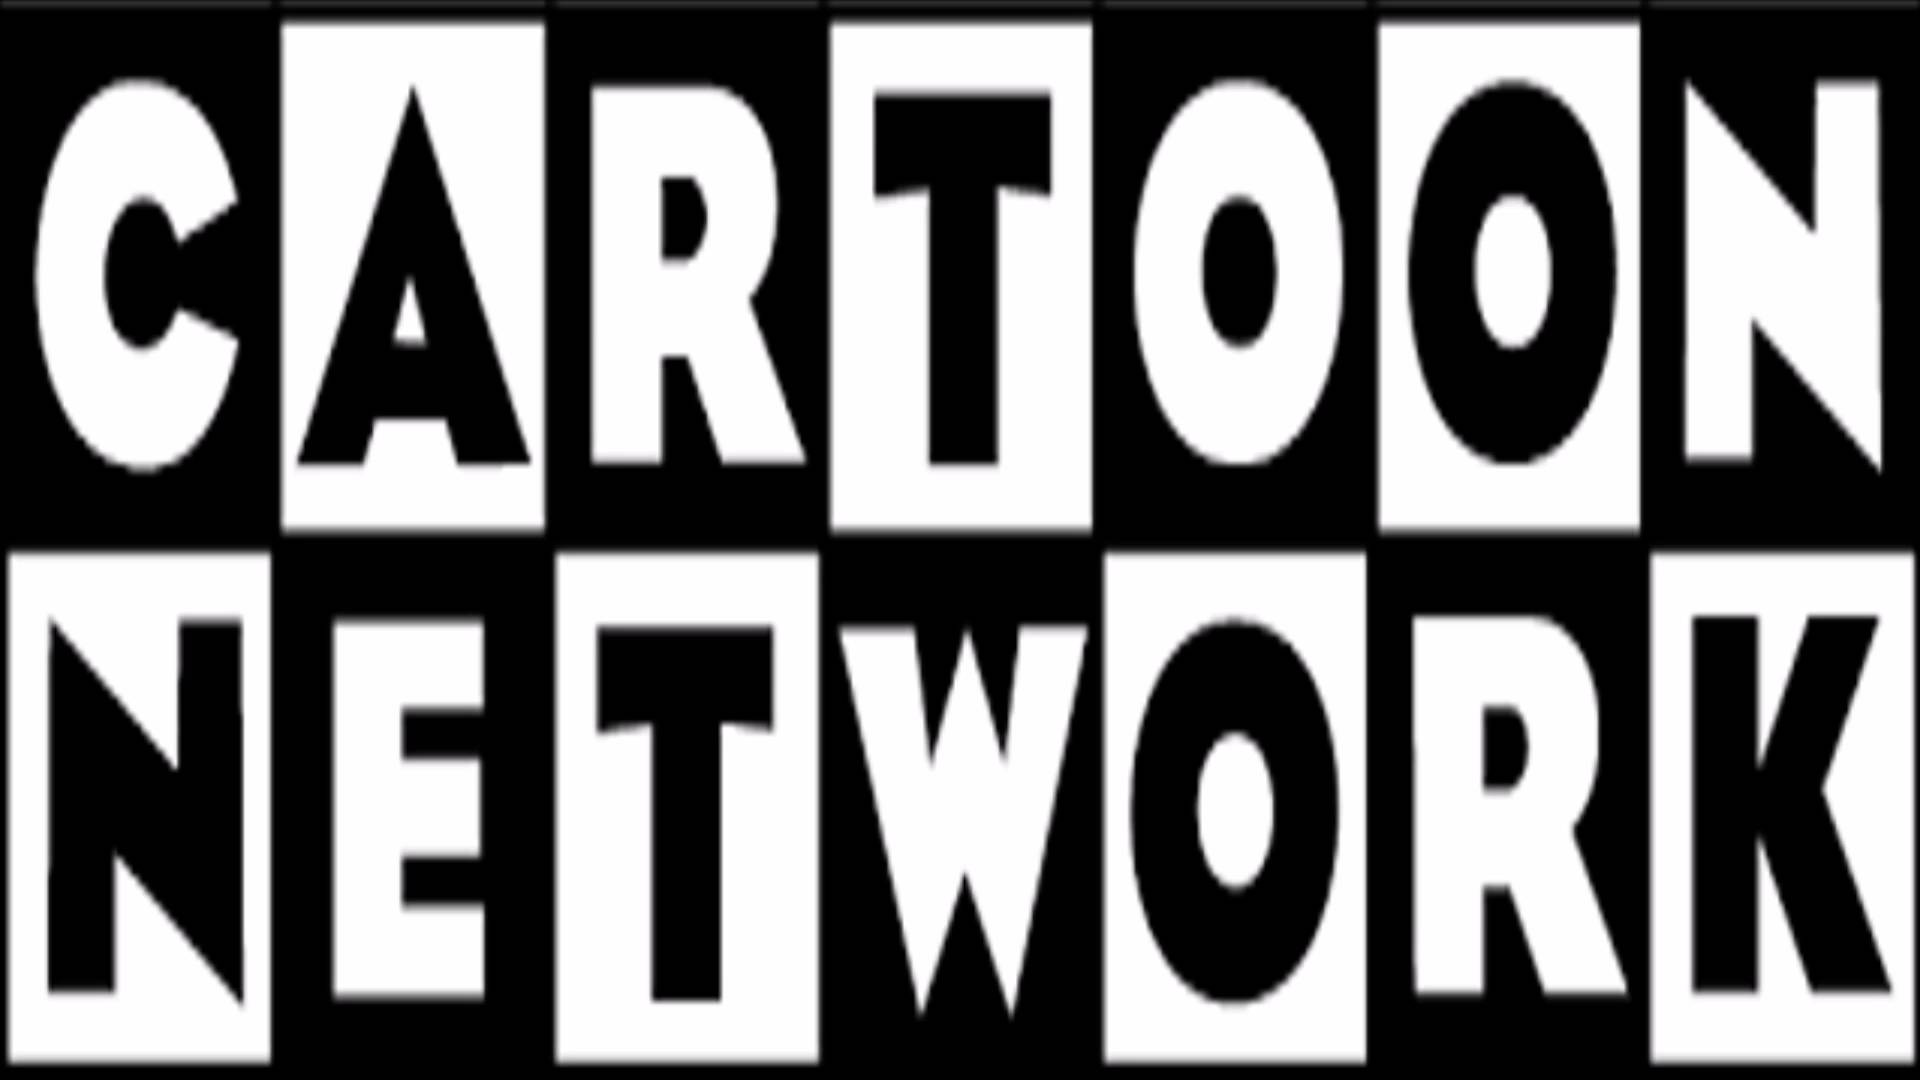 Cartoon network Logos